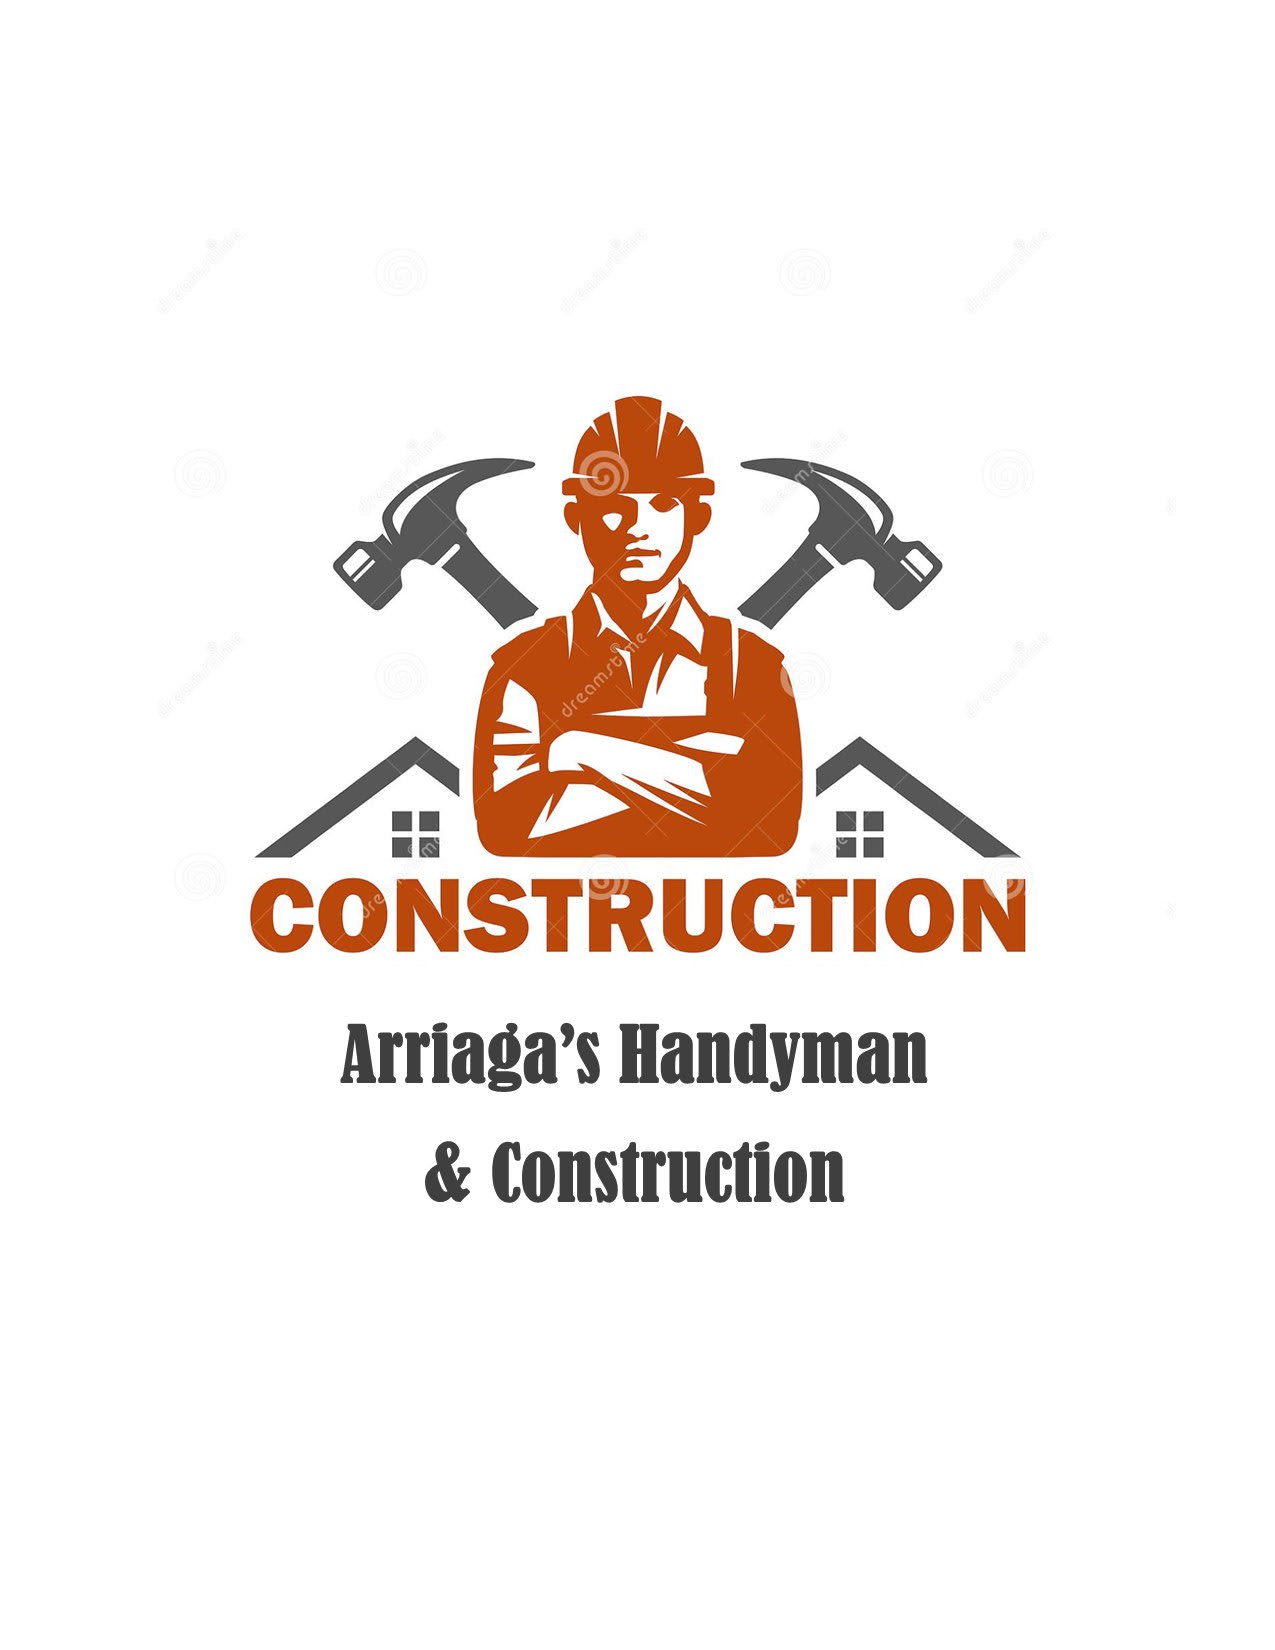 Arriaga's Handyman and Construction